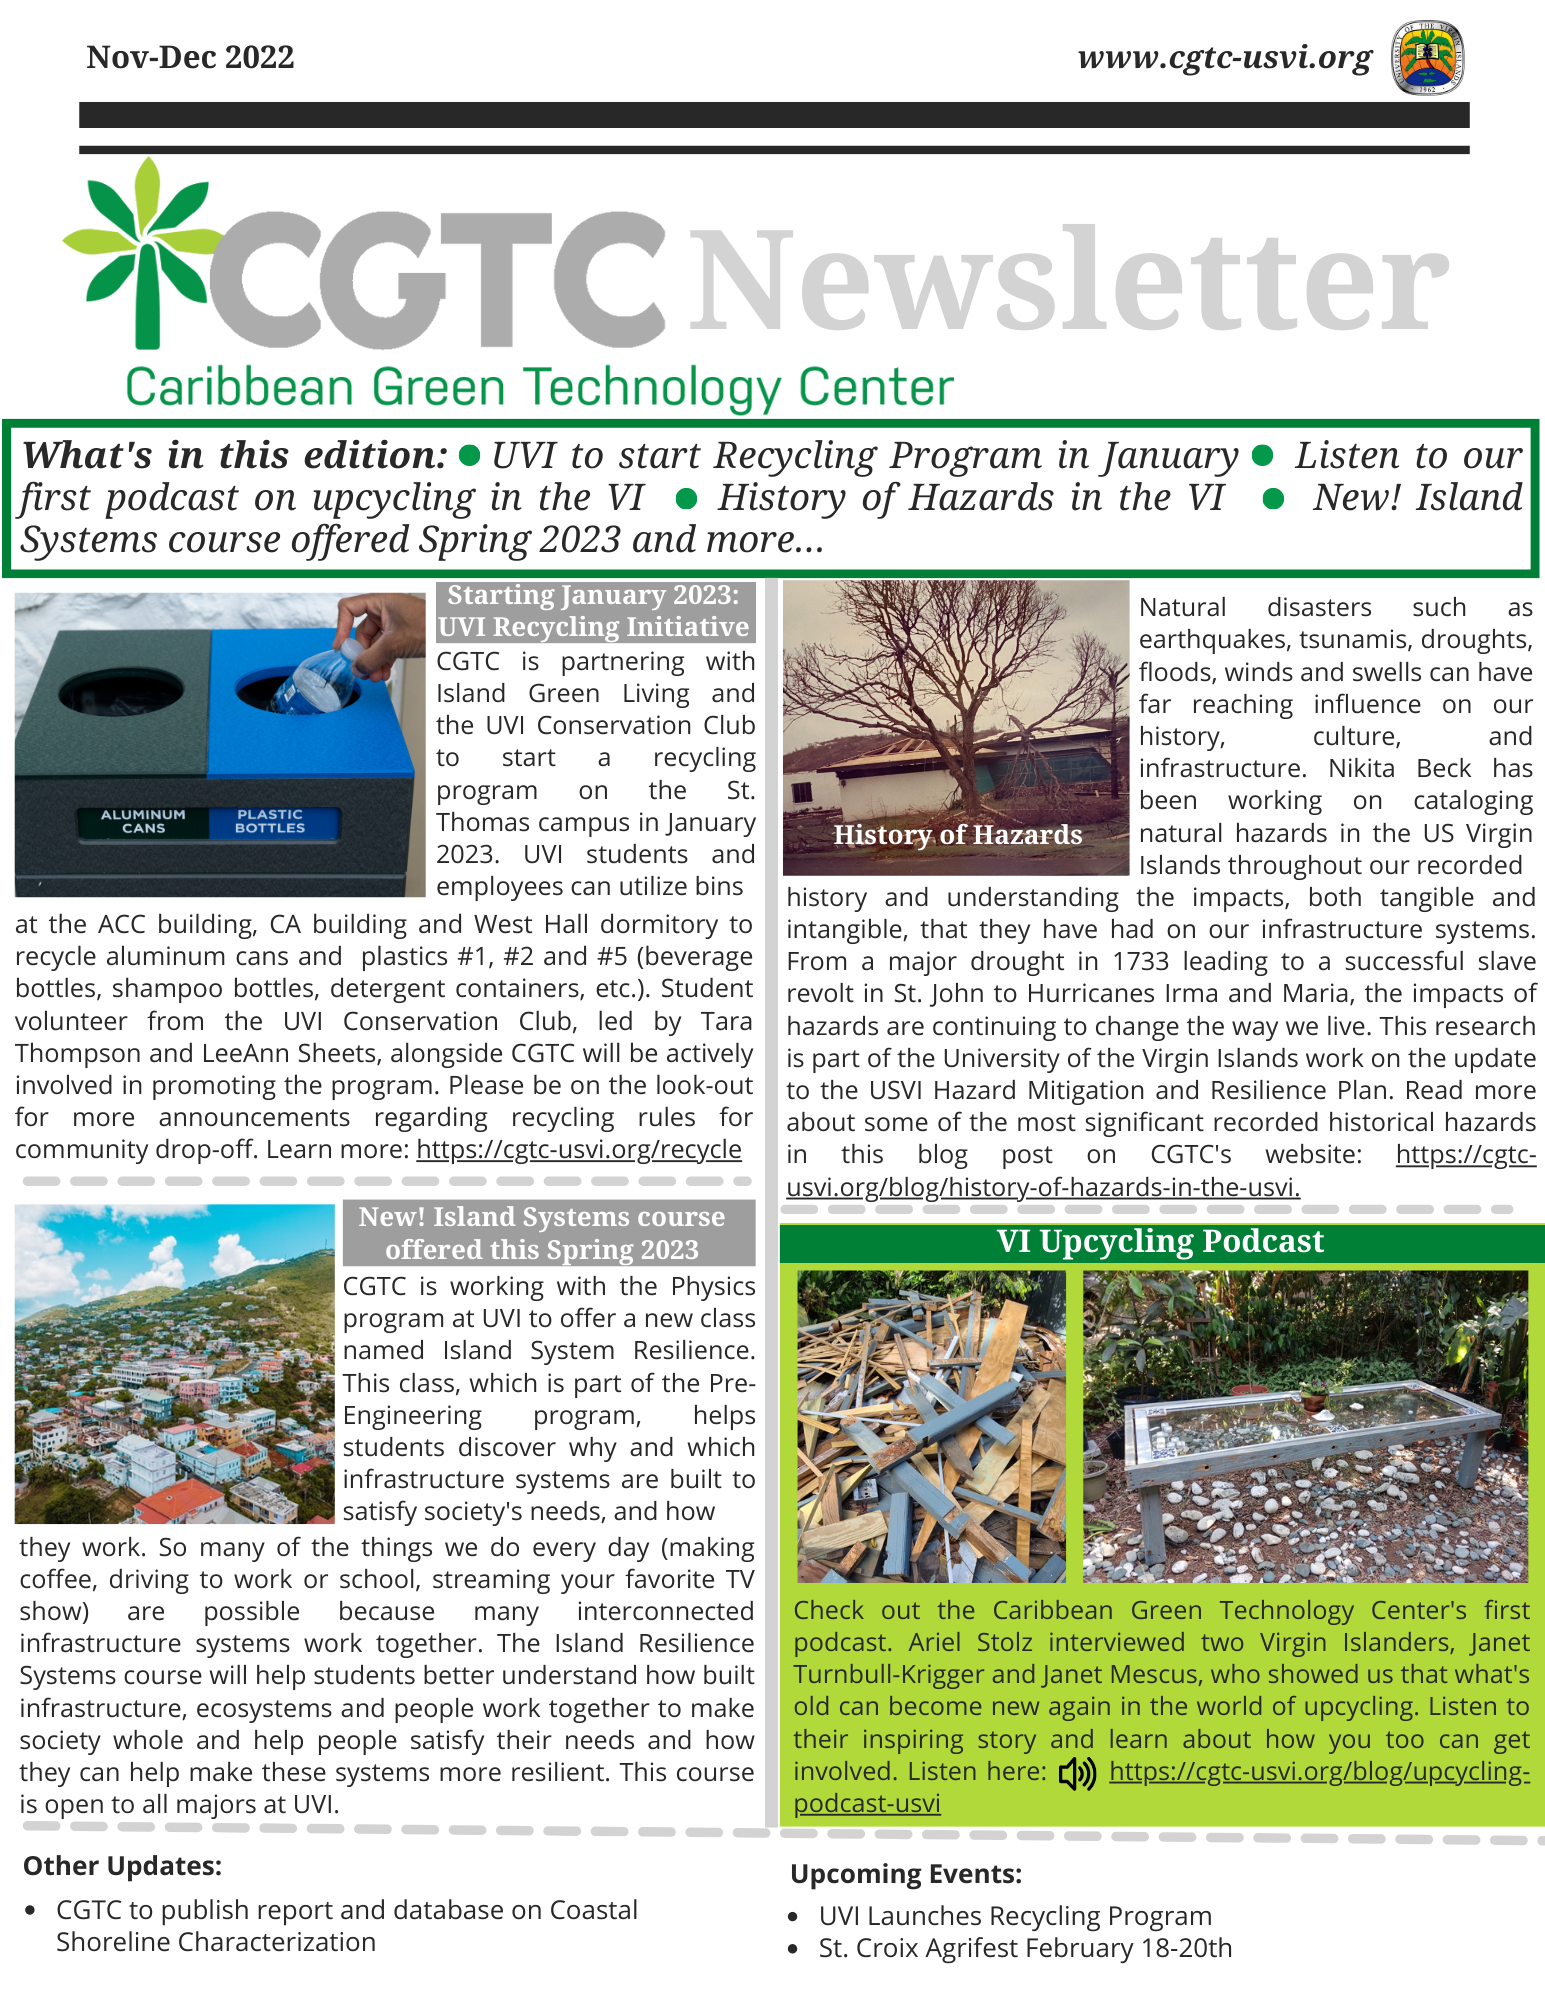 CGTC Newsletter Nov-Dec 2022